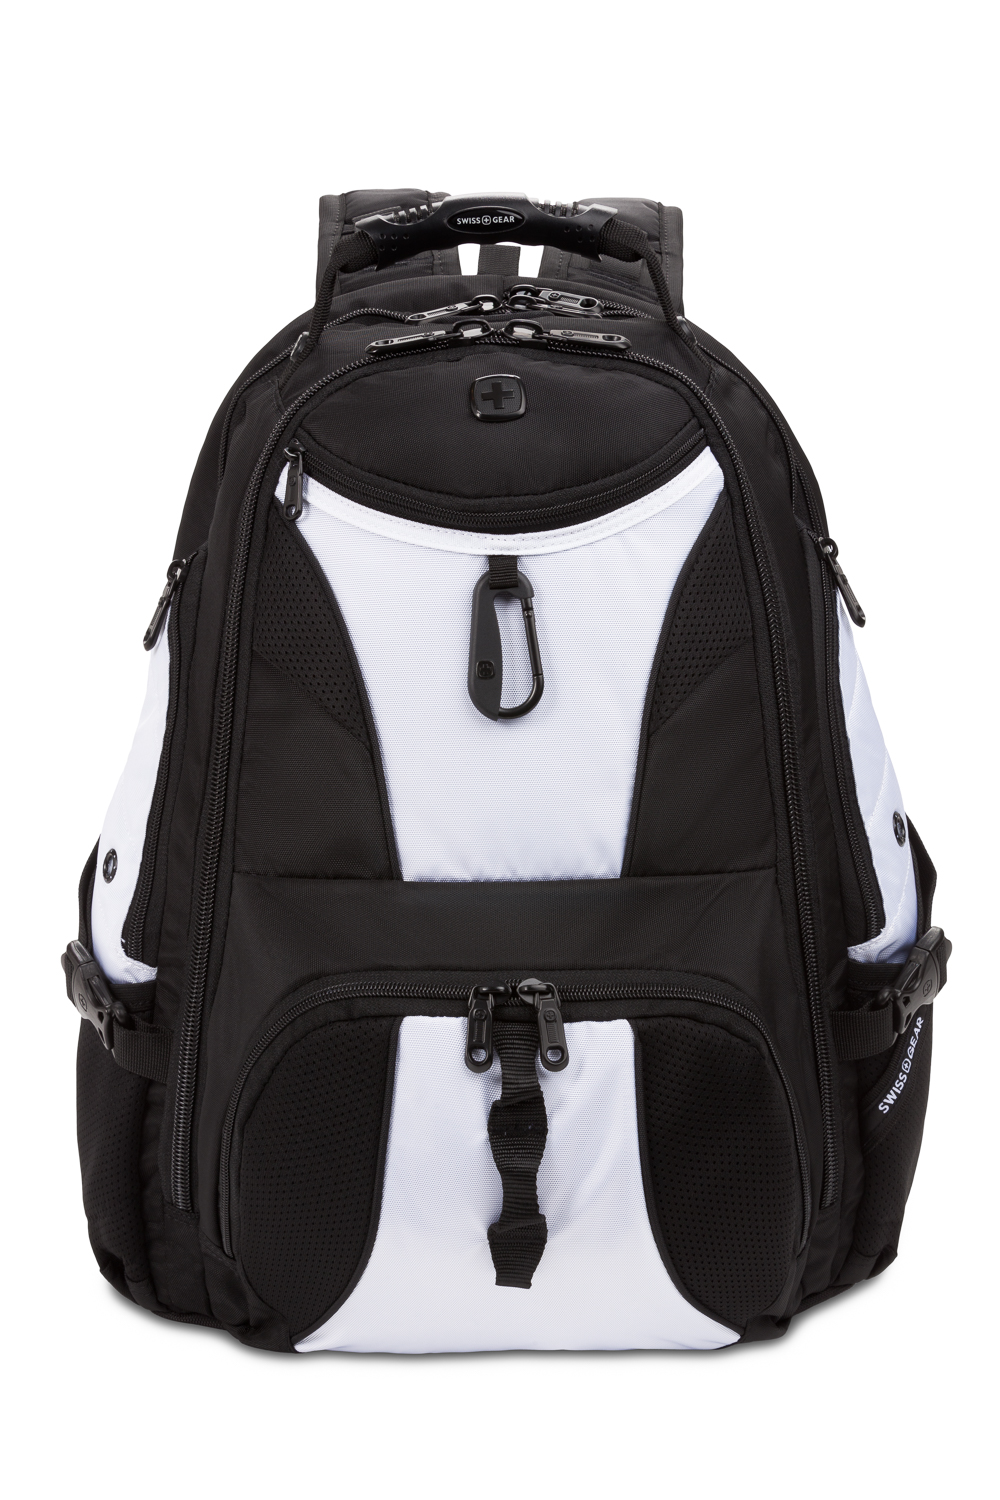 Swissgear 1900 Black Series ScanSmart Laptop Backpack - Bag